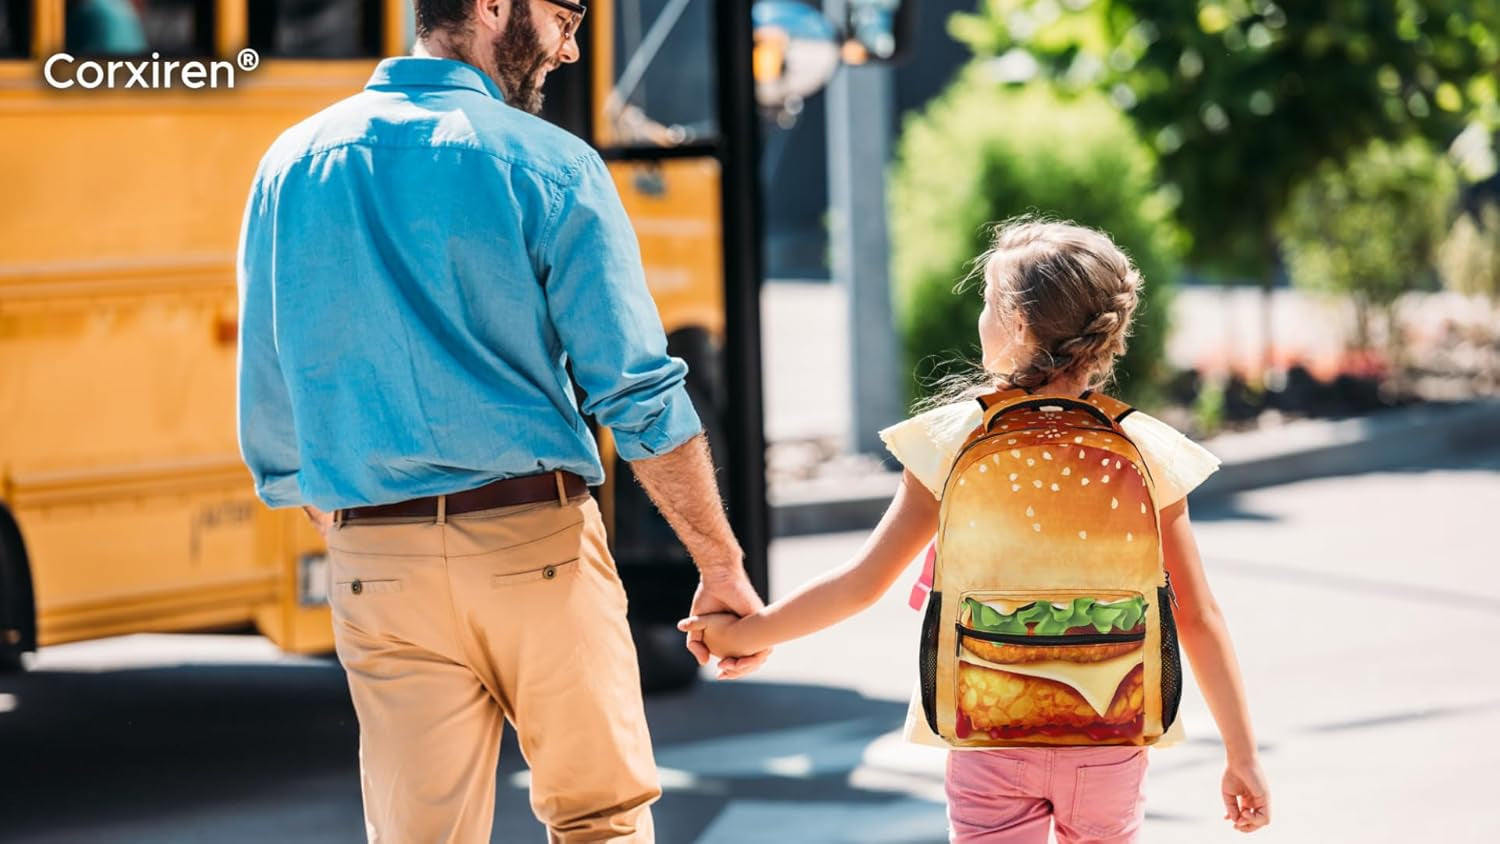 Hamburger Backpack for Boys Girls Funny Laptop Travel Laptop Daypack School Bag with Multiple Pockets for Kids17-Inch